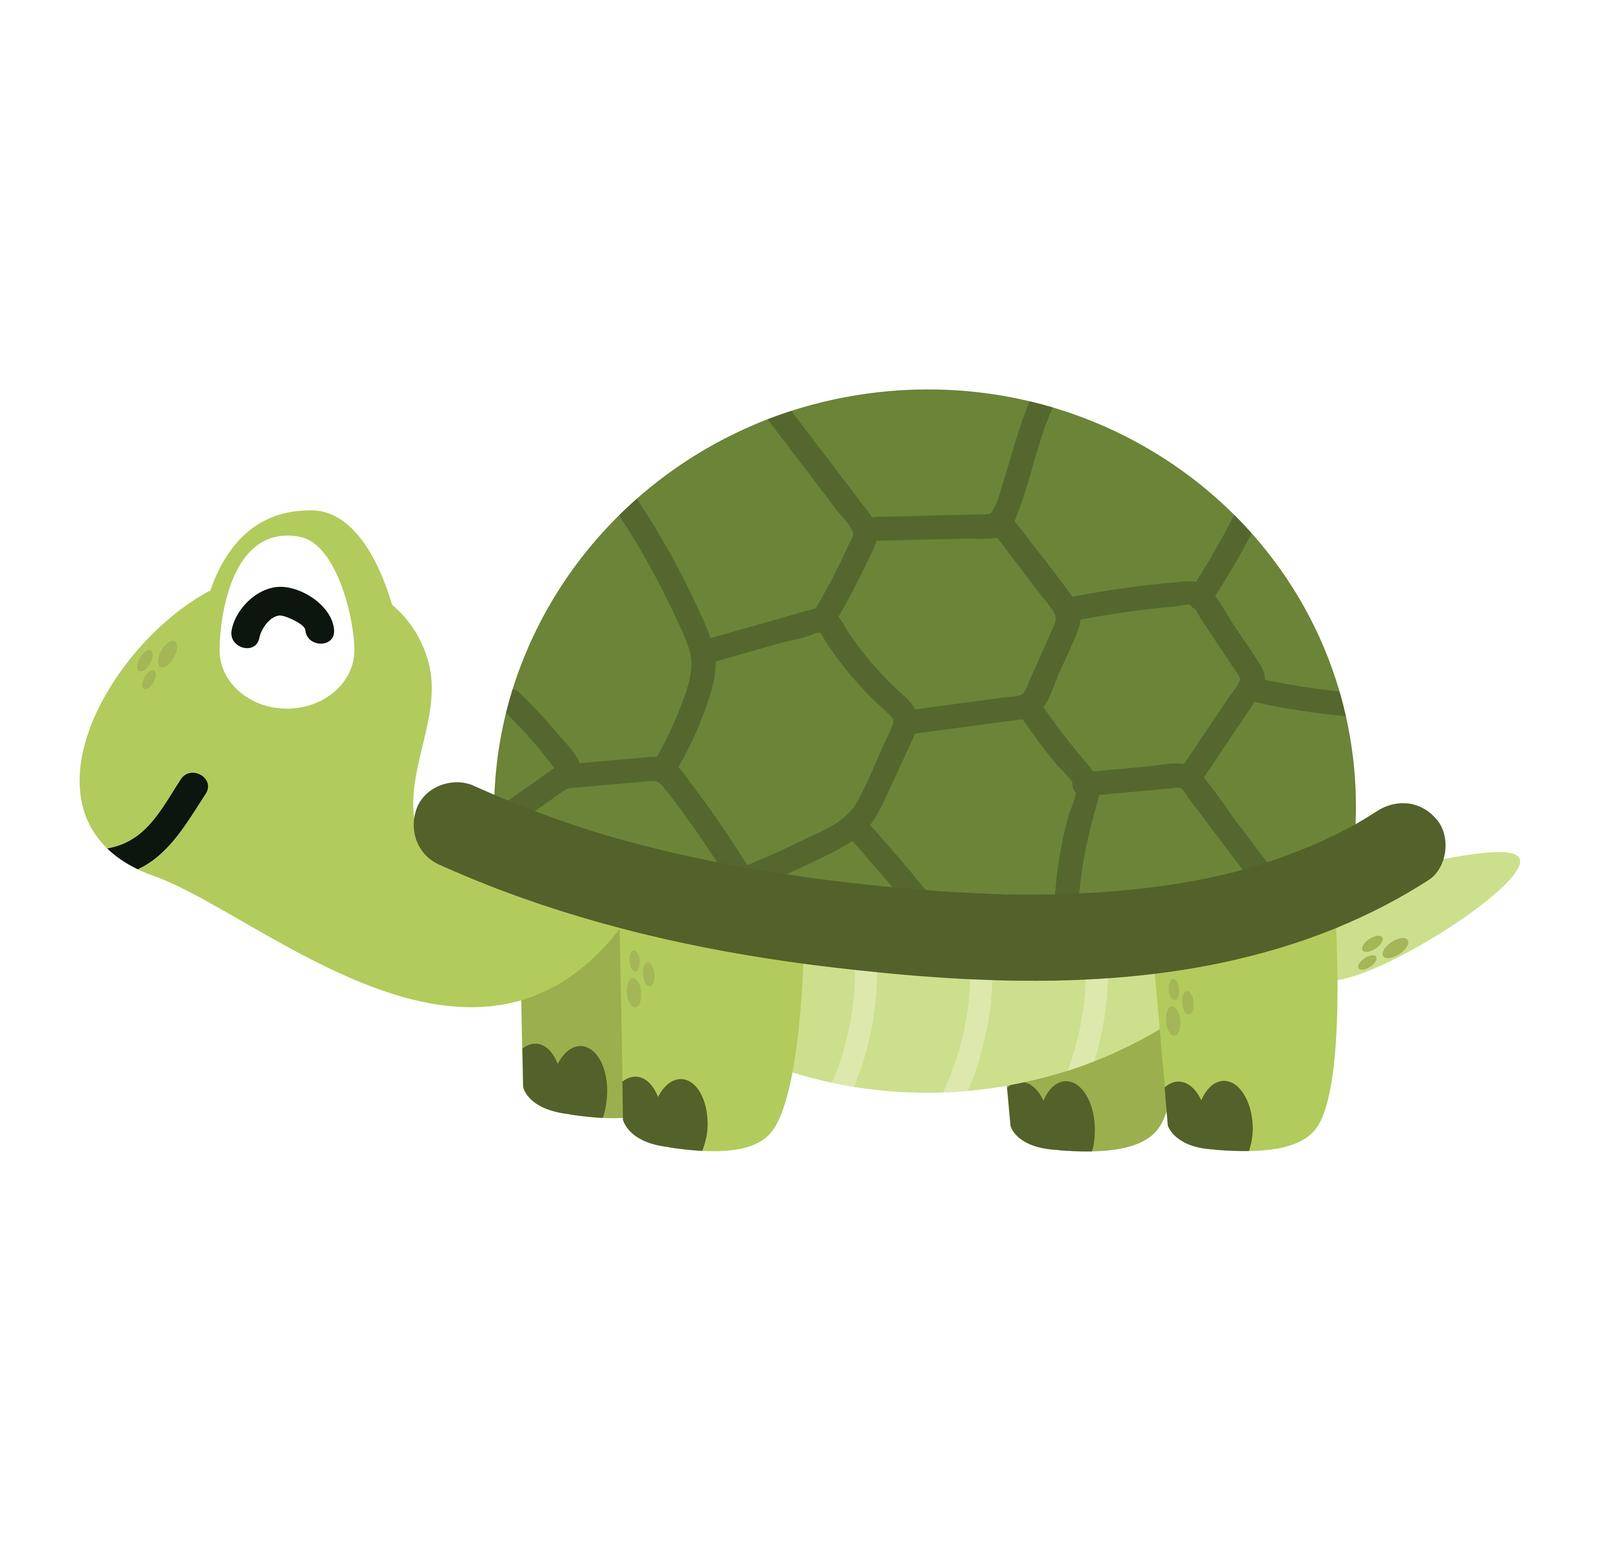  turtle wild  animal cartoon vector by focus_bell